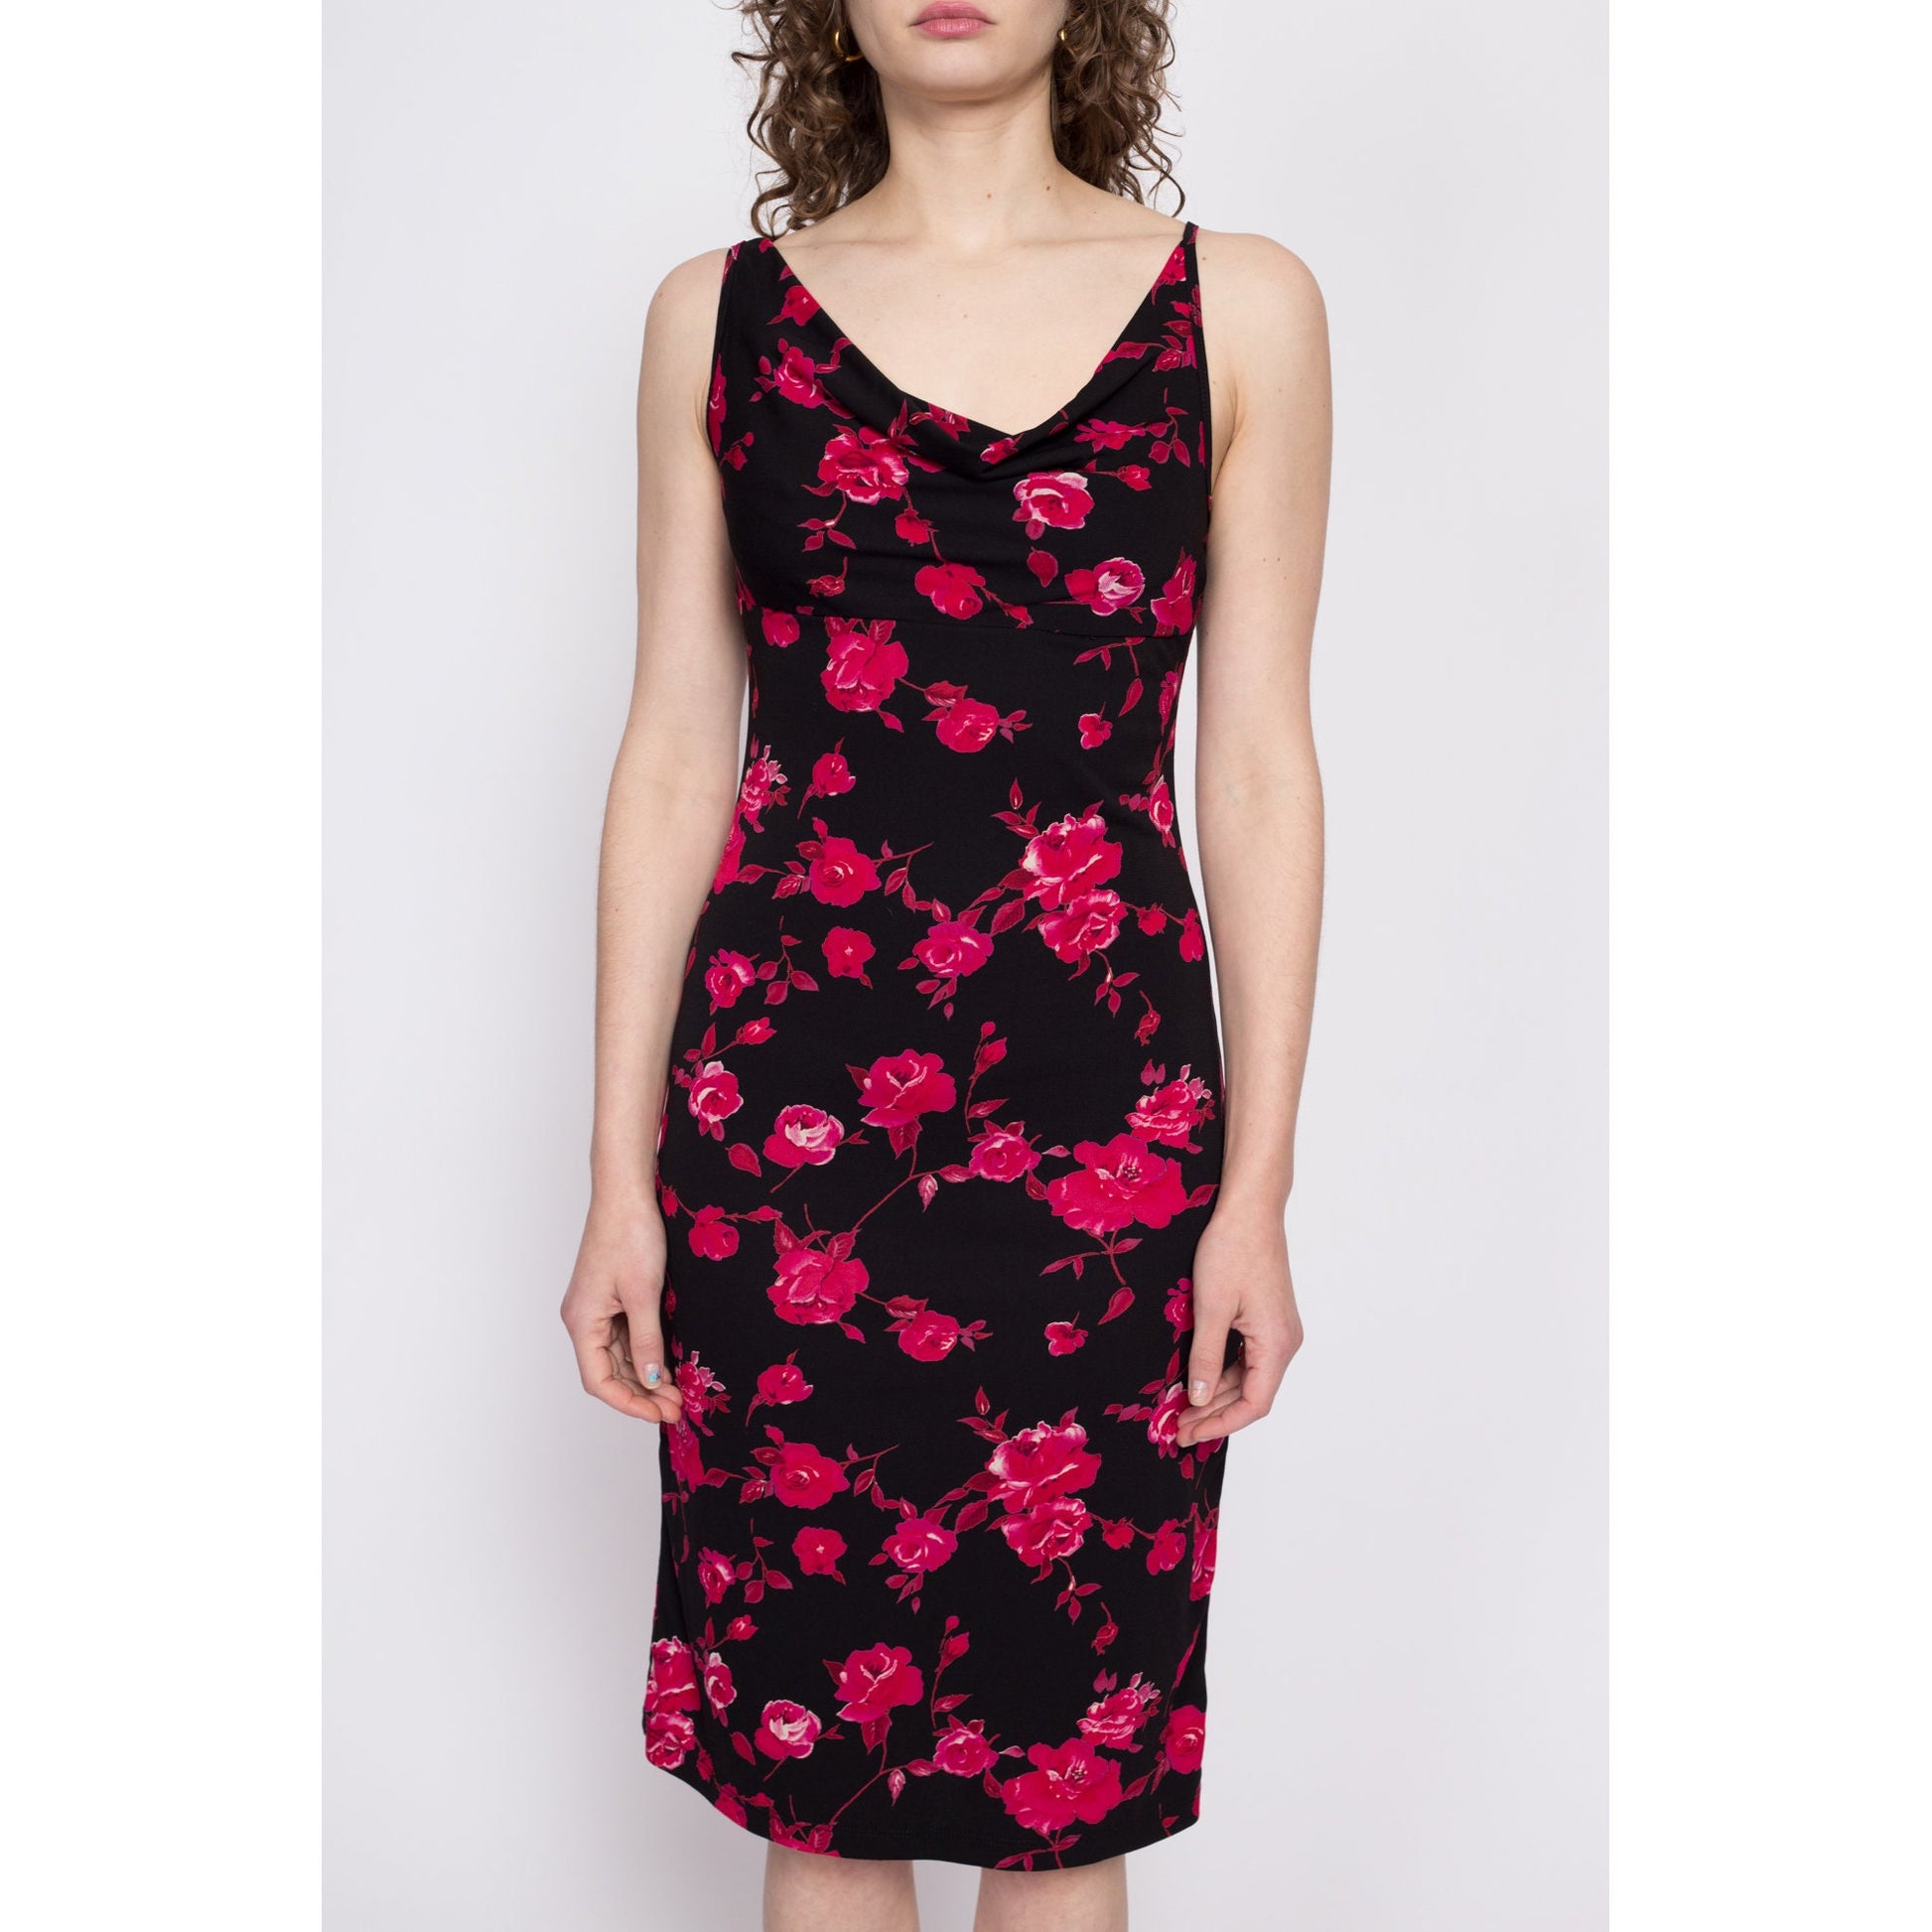 90s Black Rose Floral Cowl Neck Dress - Small to Medium | Vintage Slinky Sleeveless Midi Party Dress